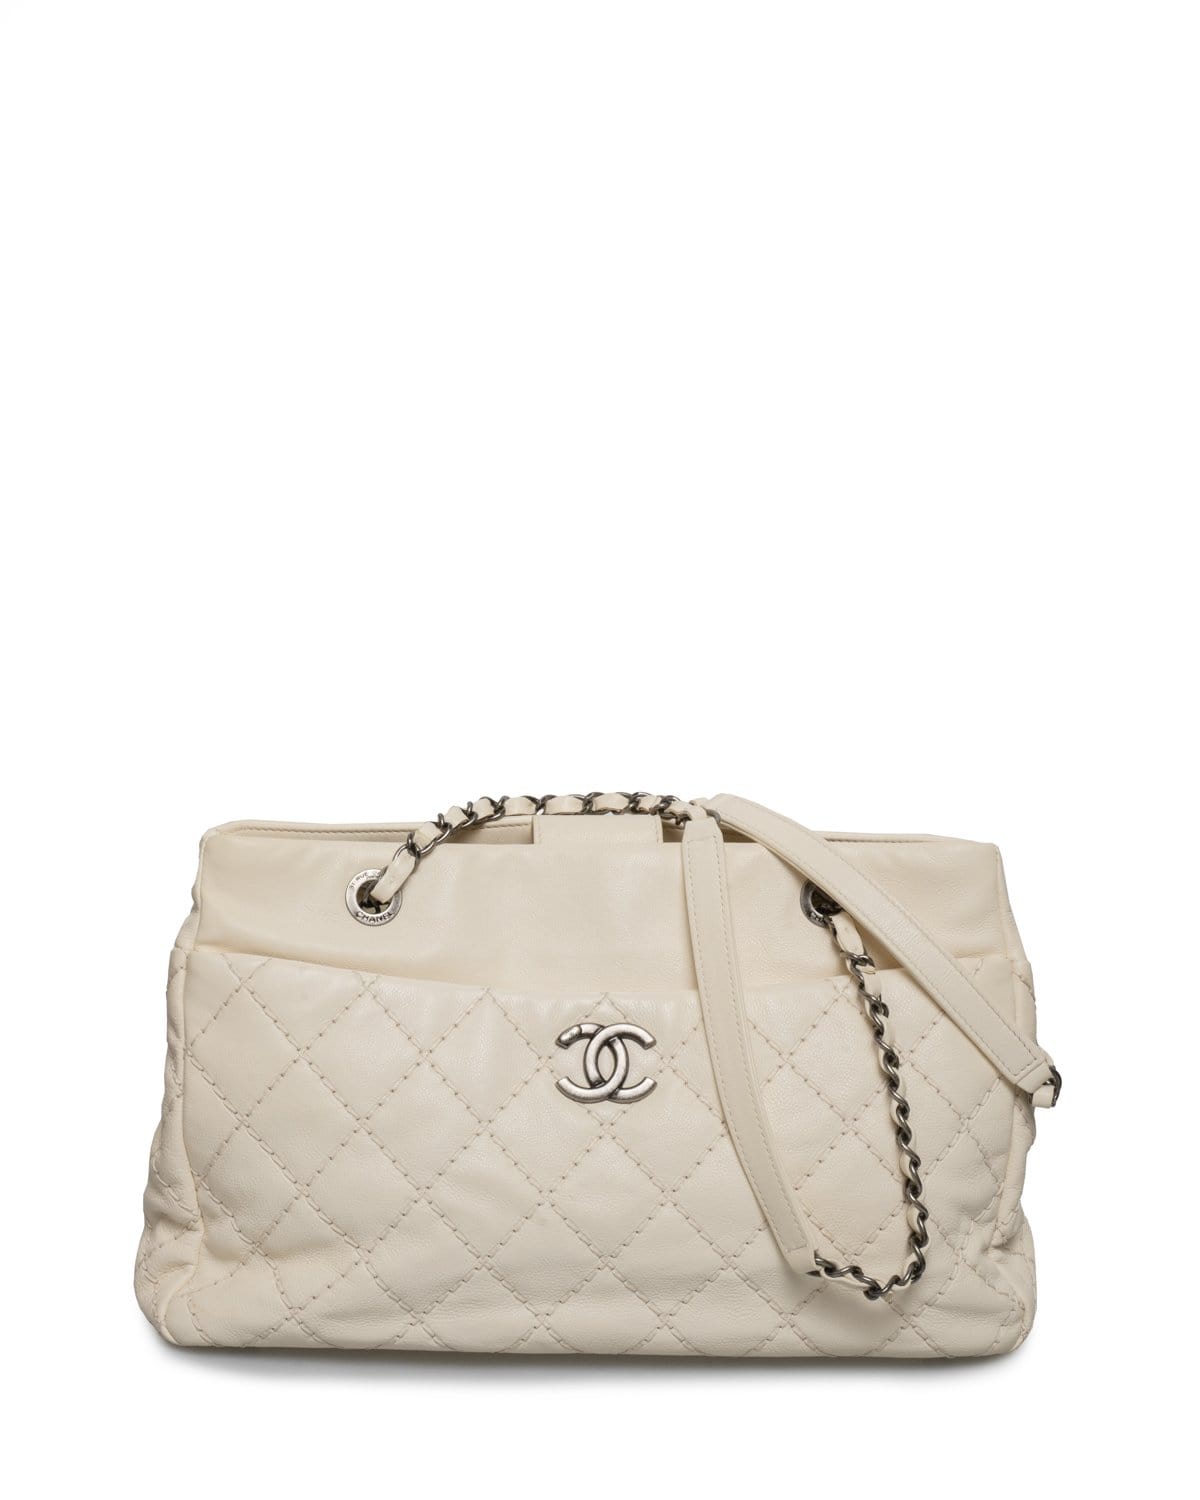 Chanel Chanel Wild Stitch tote Bag - ADL1517